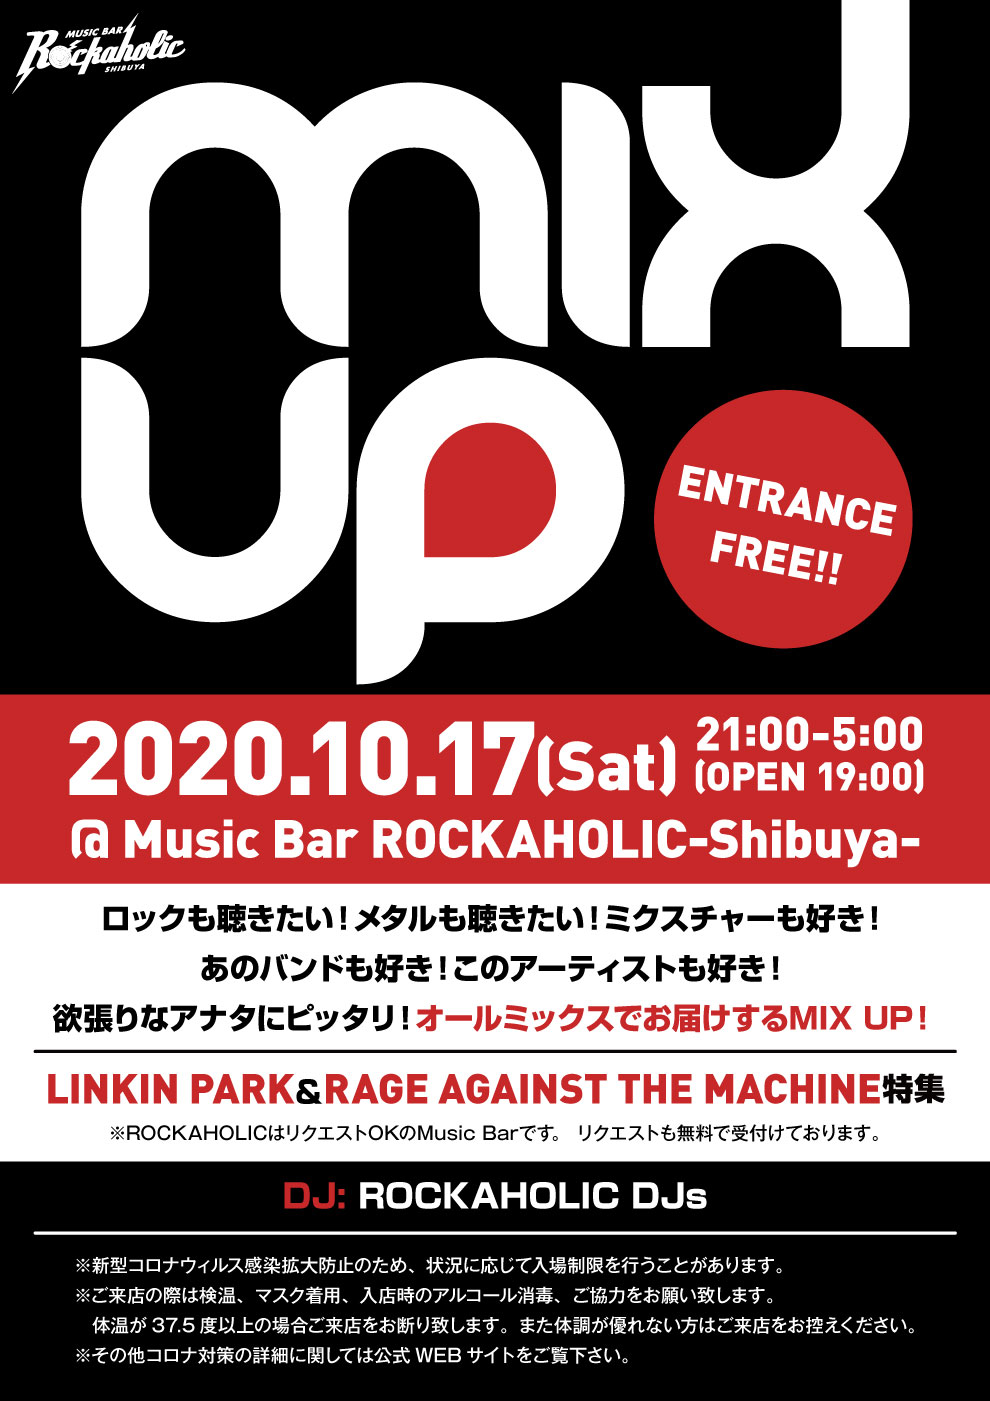 https://bar-rockaholic.jp/shibuya/blog/BF02B536-6AB7-4FC3-A2DA-FB05F6099447.jpeg